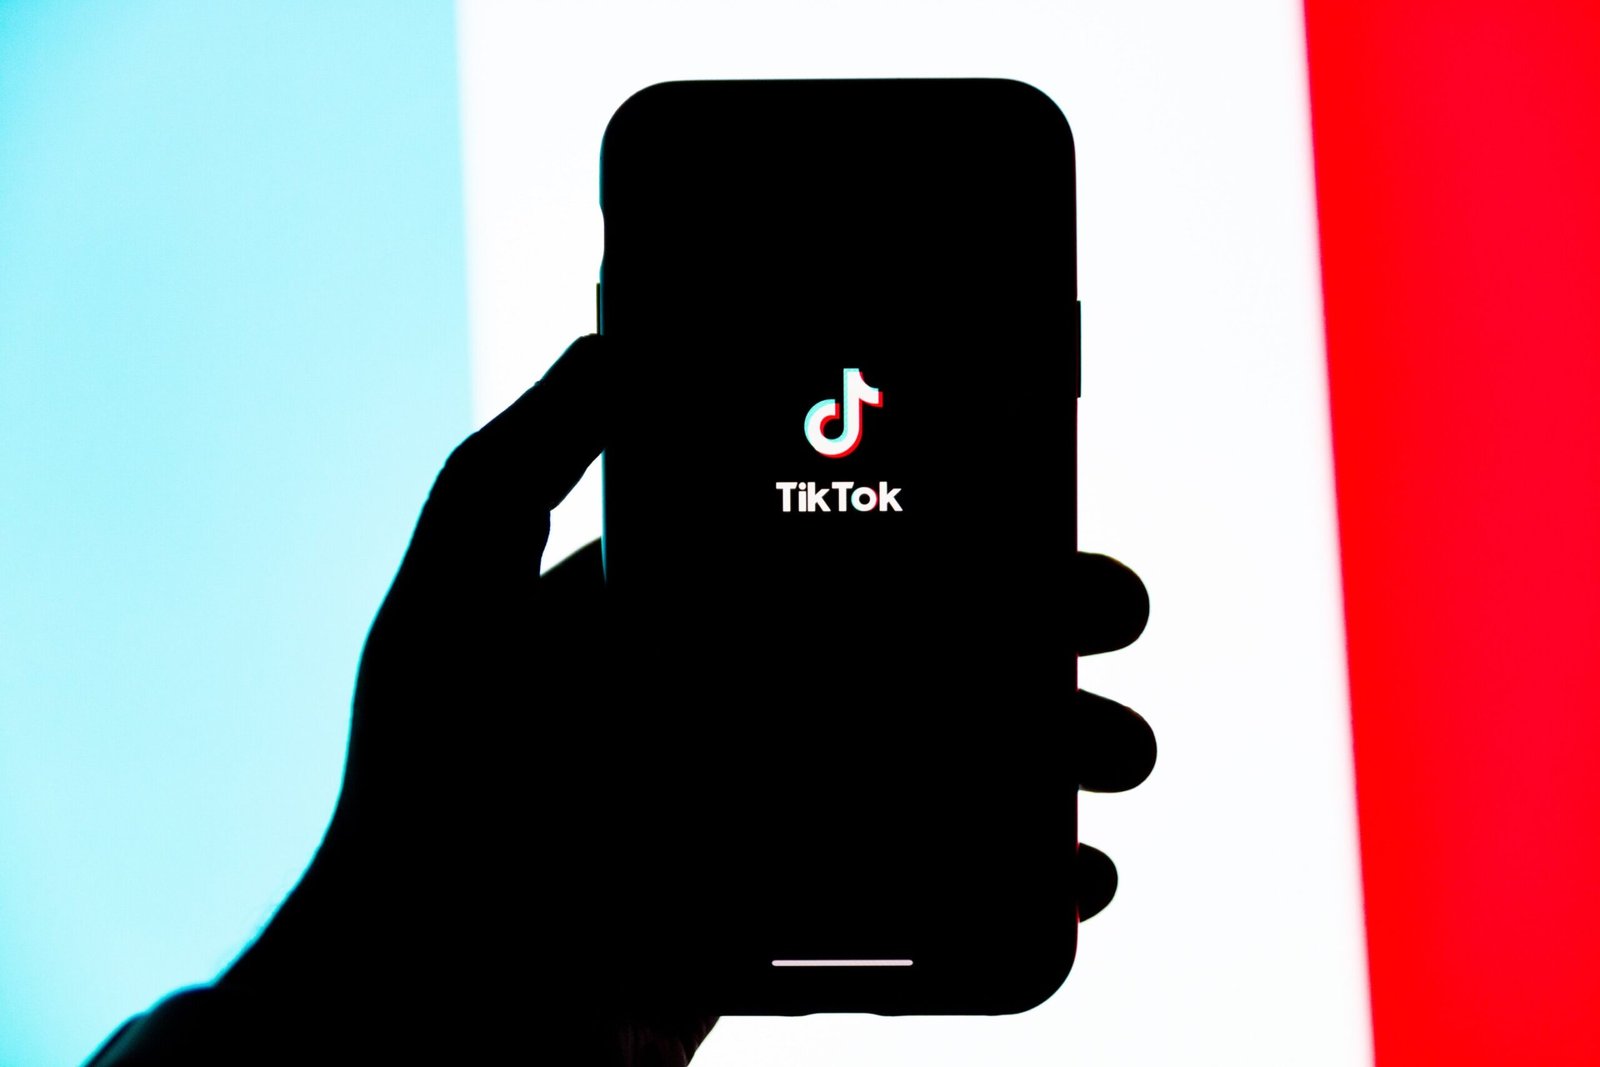 TikTok law threatening a ban if the app isn't sold raises First Amendment concerns